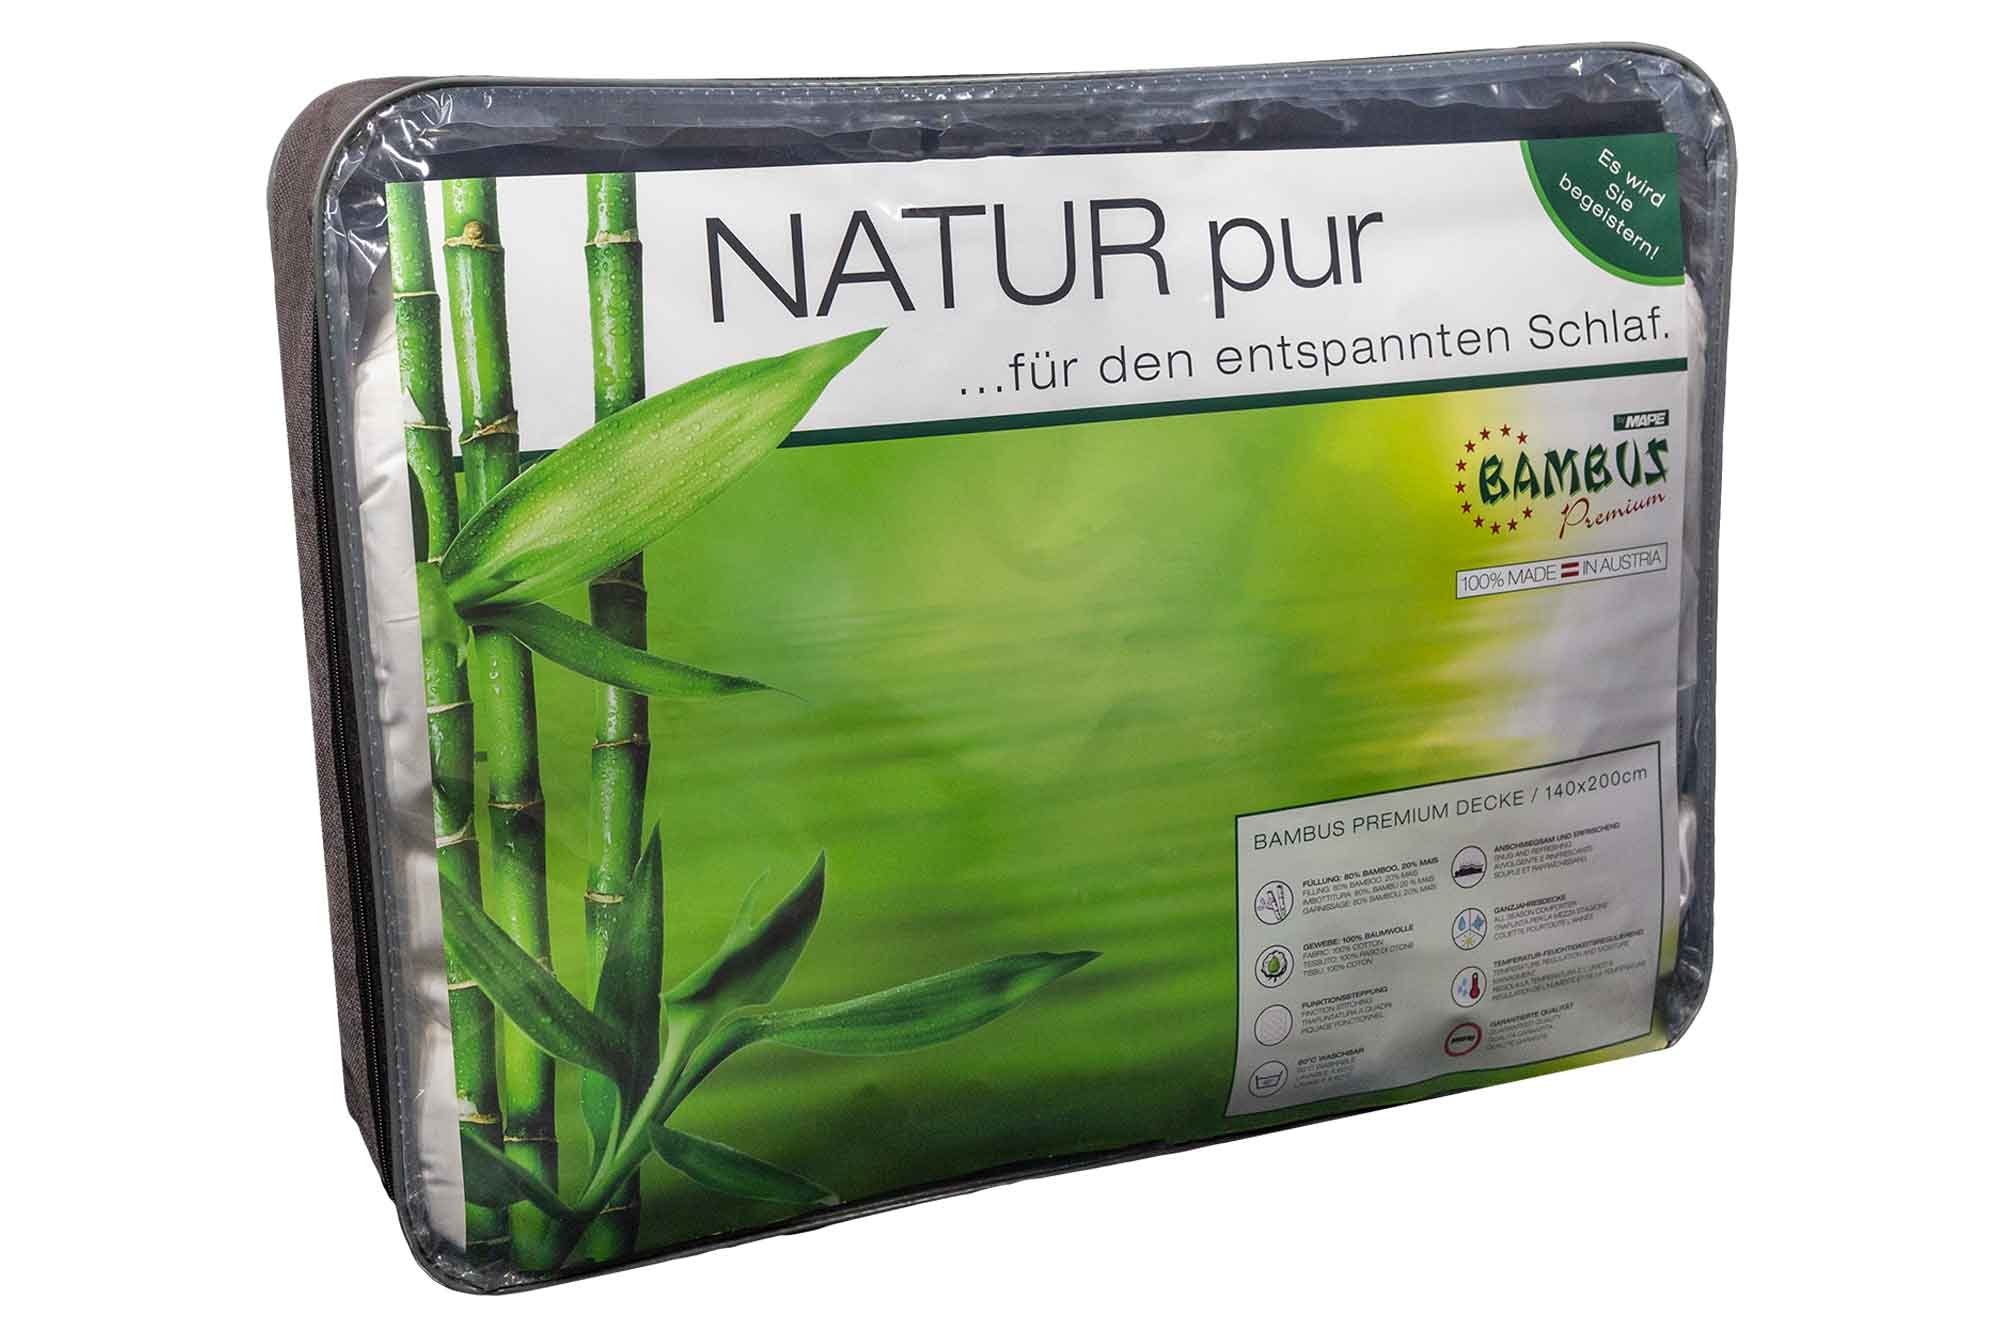 Naturfaserbettdecke, Bambus Premium Decke 140 x 200 cm, Eccovital, Füllung:  Bambus | Allergiker Bettdecken